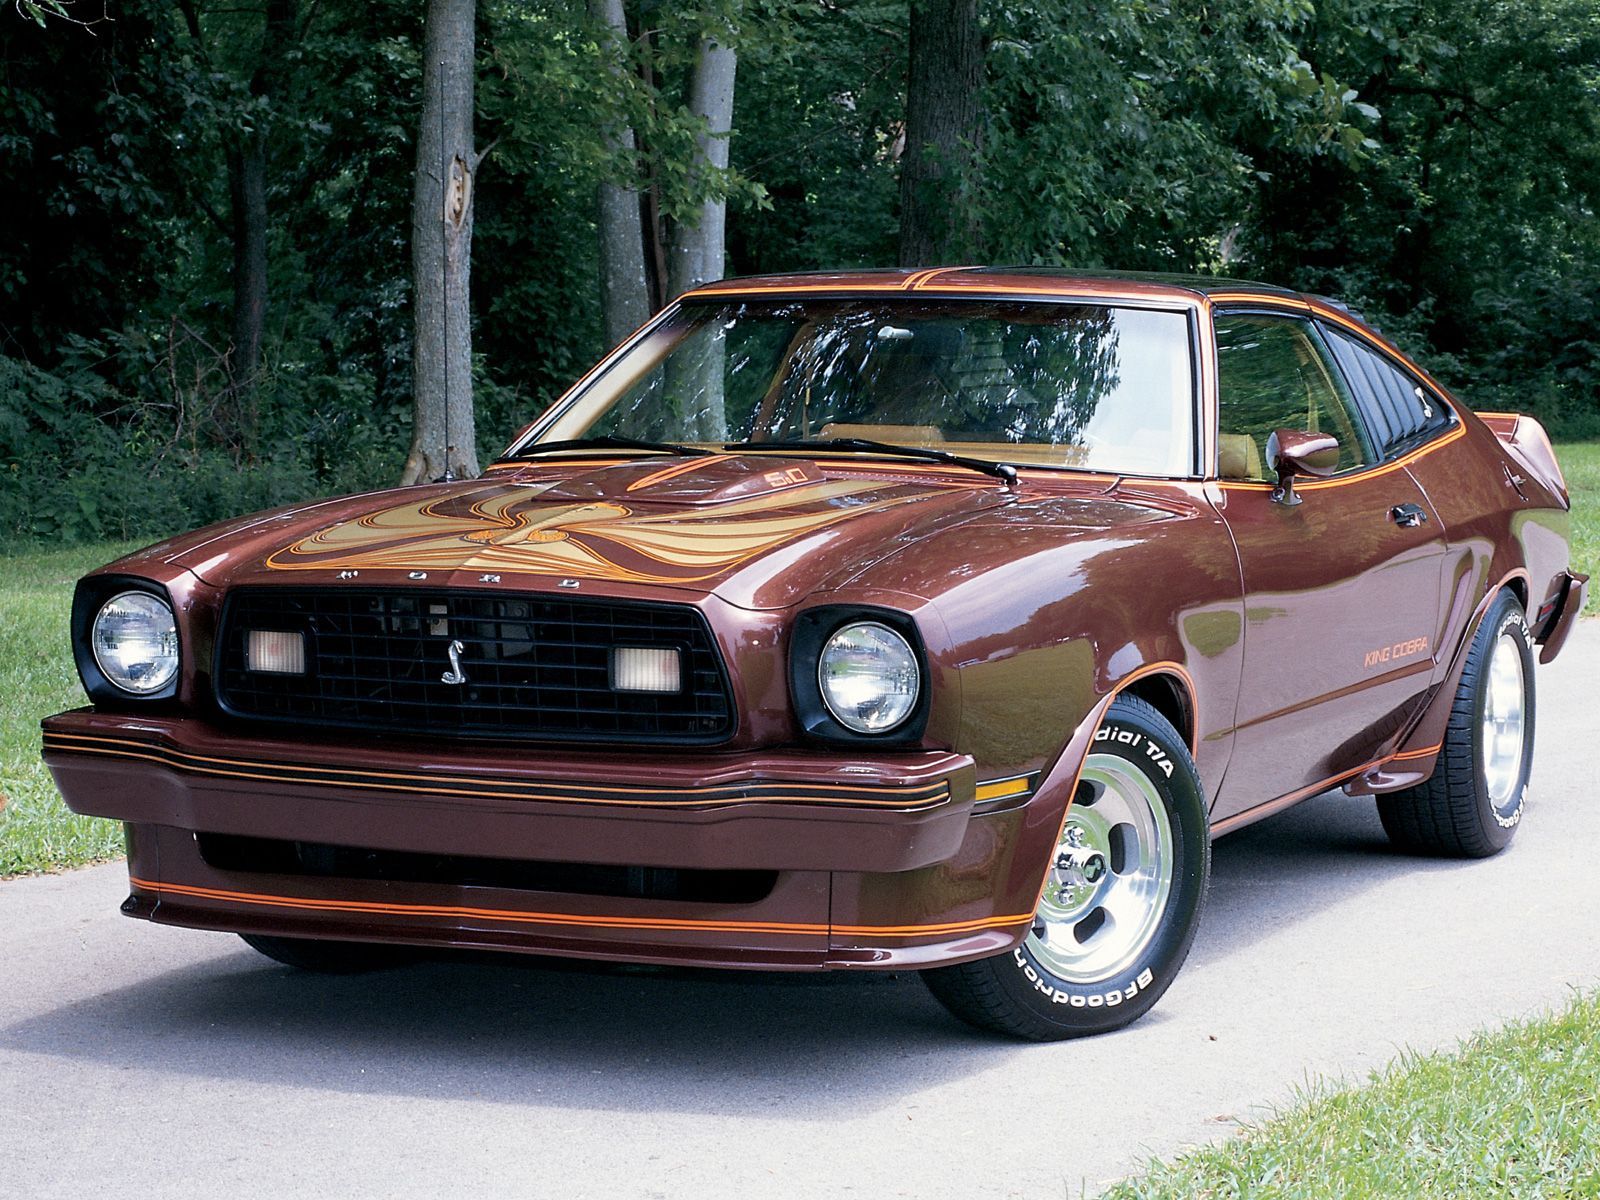 Chestnut Dark Brown 1978 Ford Mustang II King Cobra on a driveway